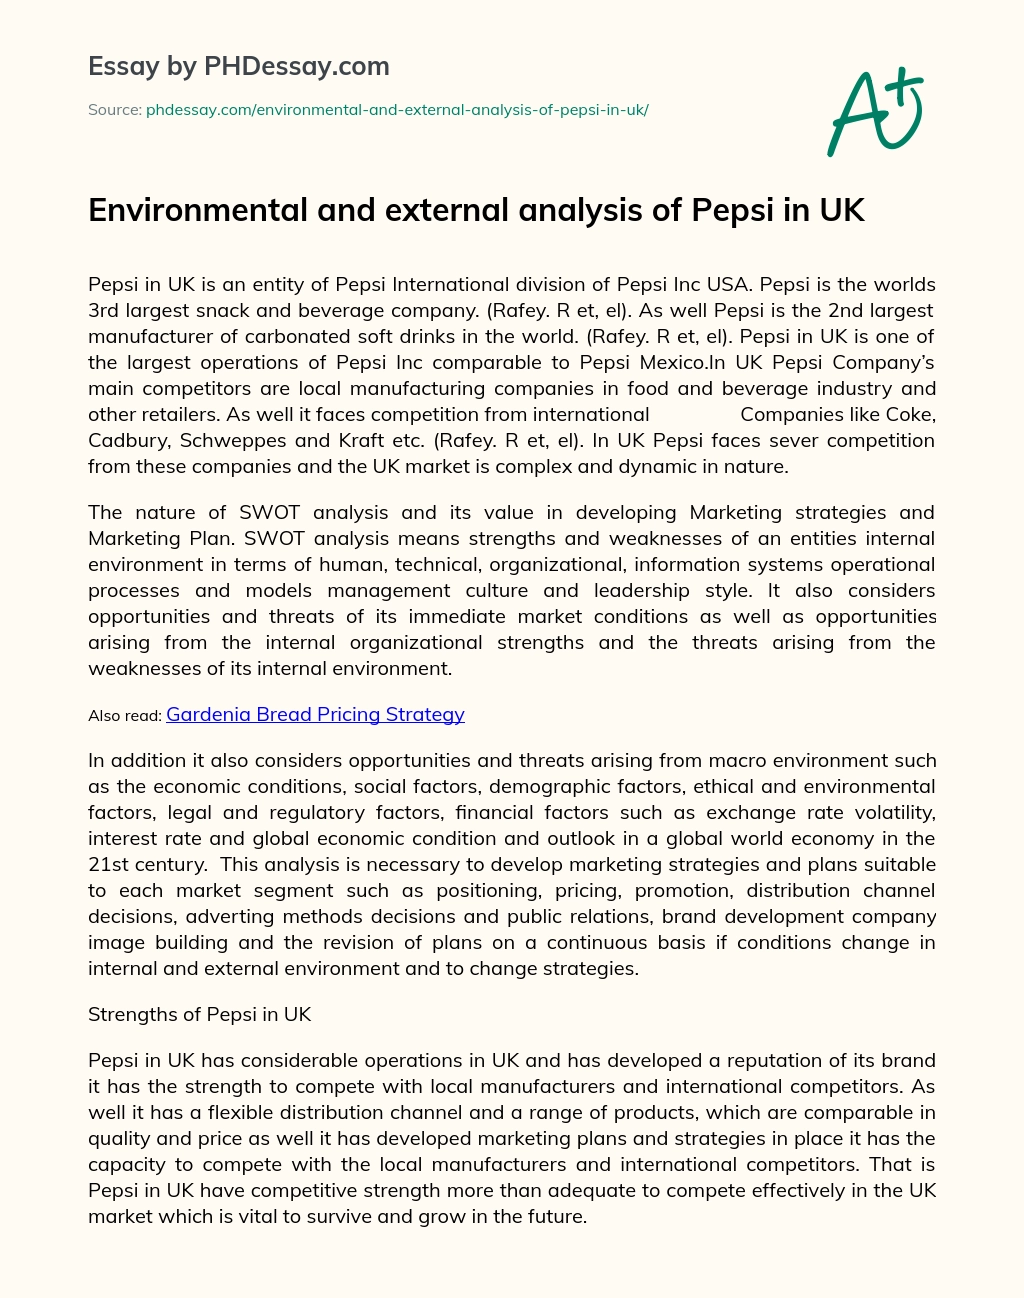 Environmental and external analysis of Pepsi in UK essay